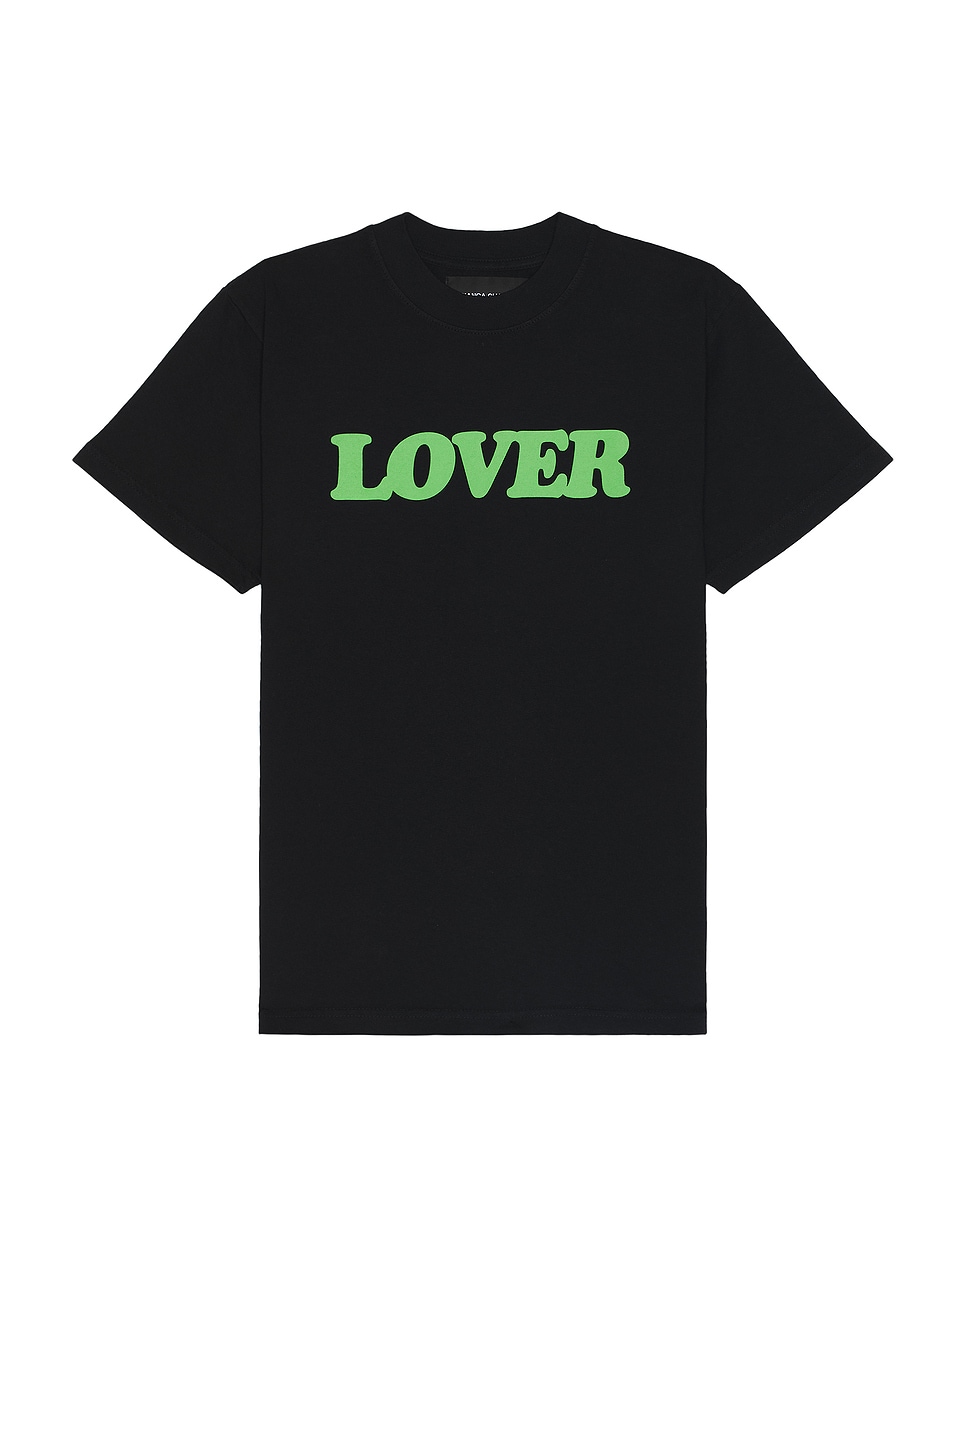 Lover Big Logo Shirt in Black